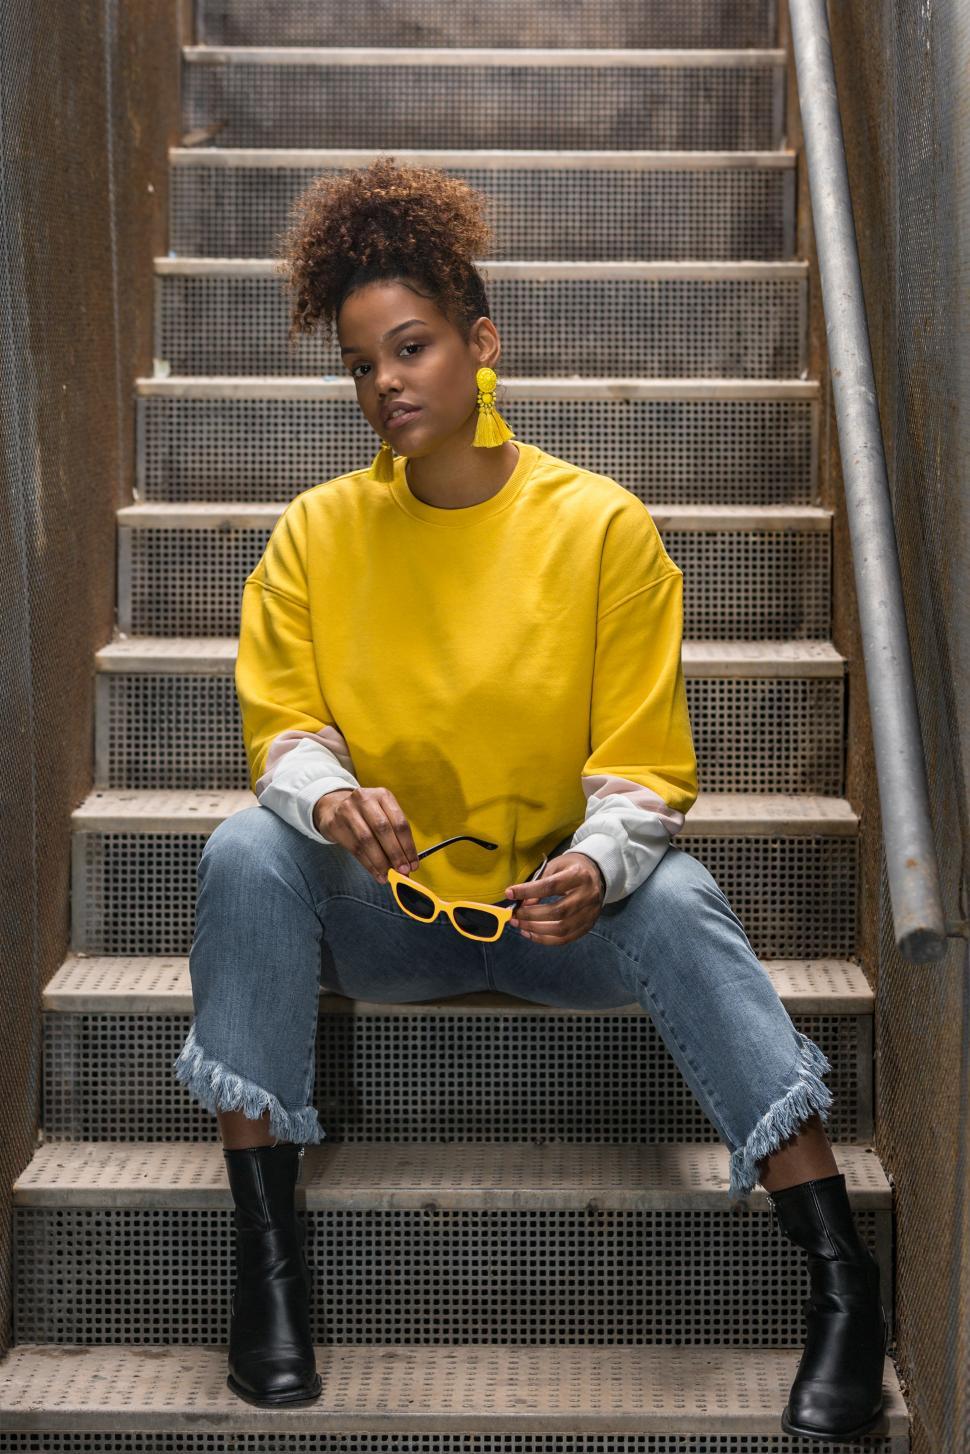 Free Image of Trendy black woman in yellow wear sitting on stairway 